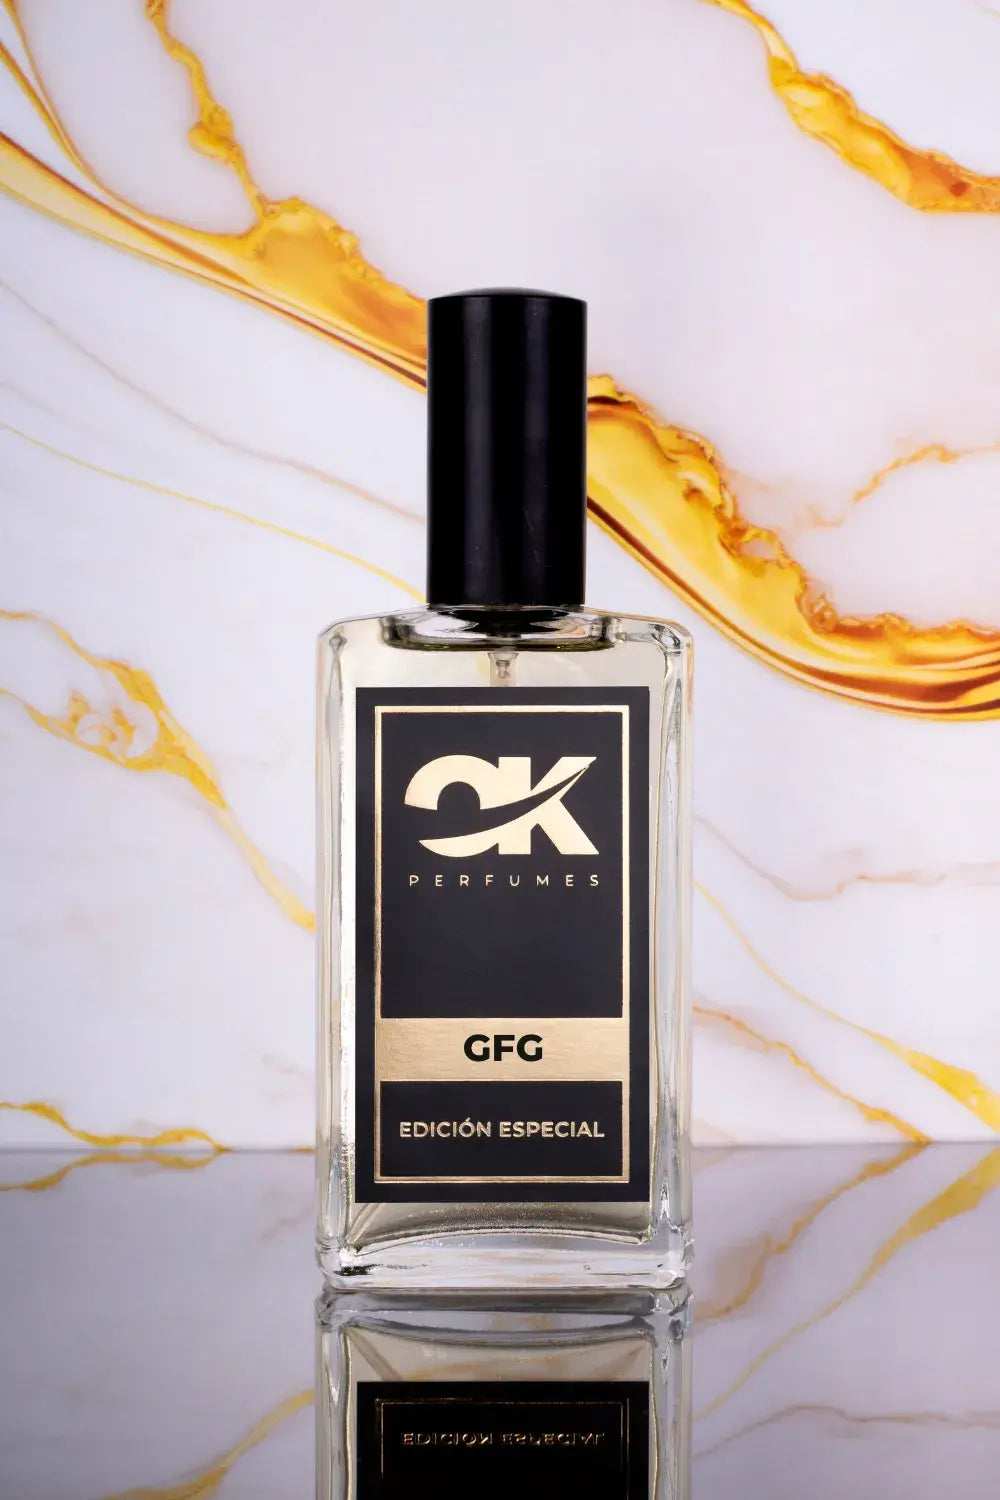 GFG - Reminiscente de Gentle Fluidity Gold de Francis Kurkdjian